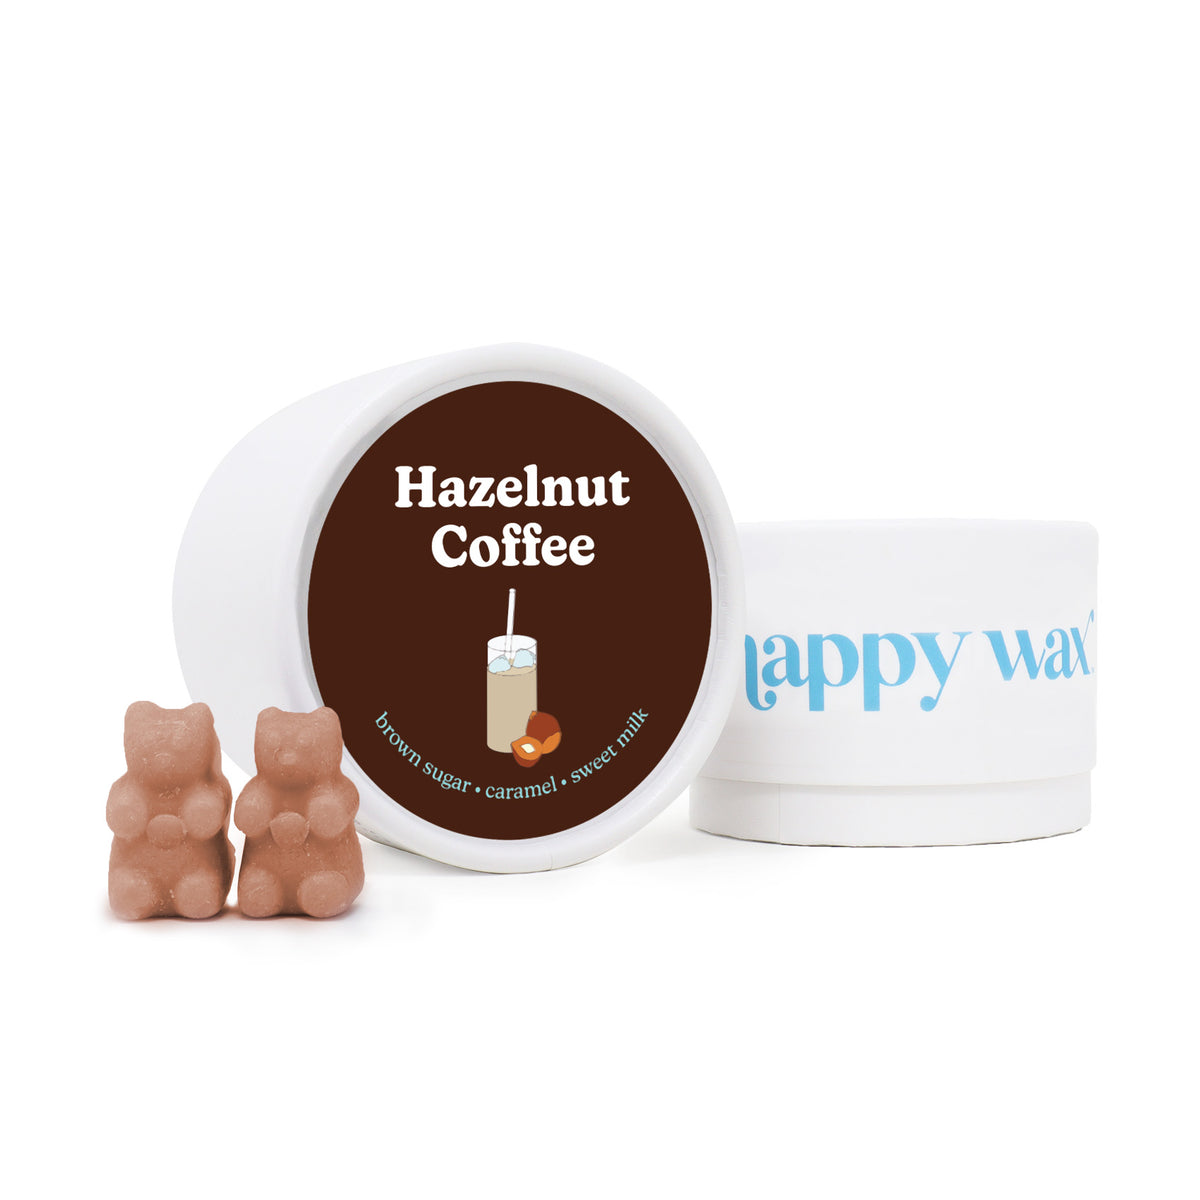 Hazelnut Coffee Wax Melts